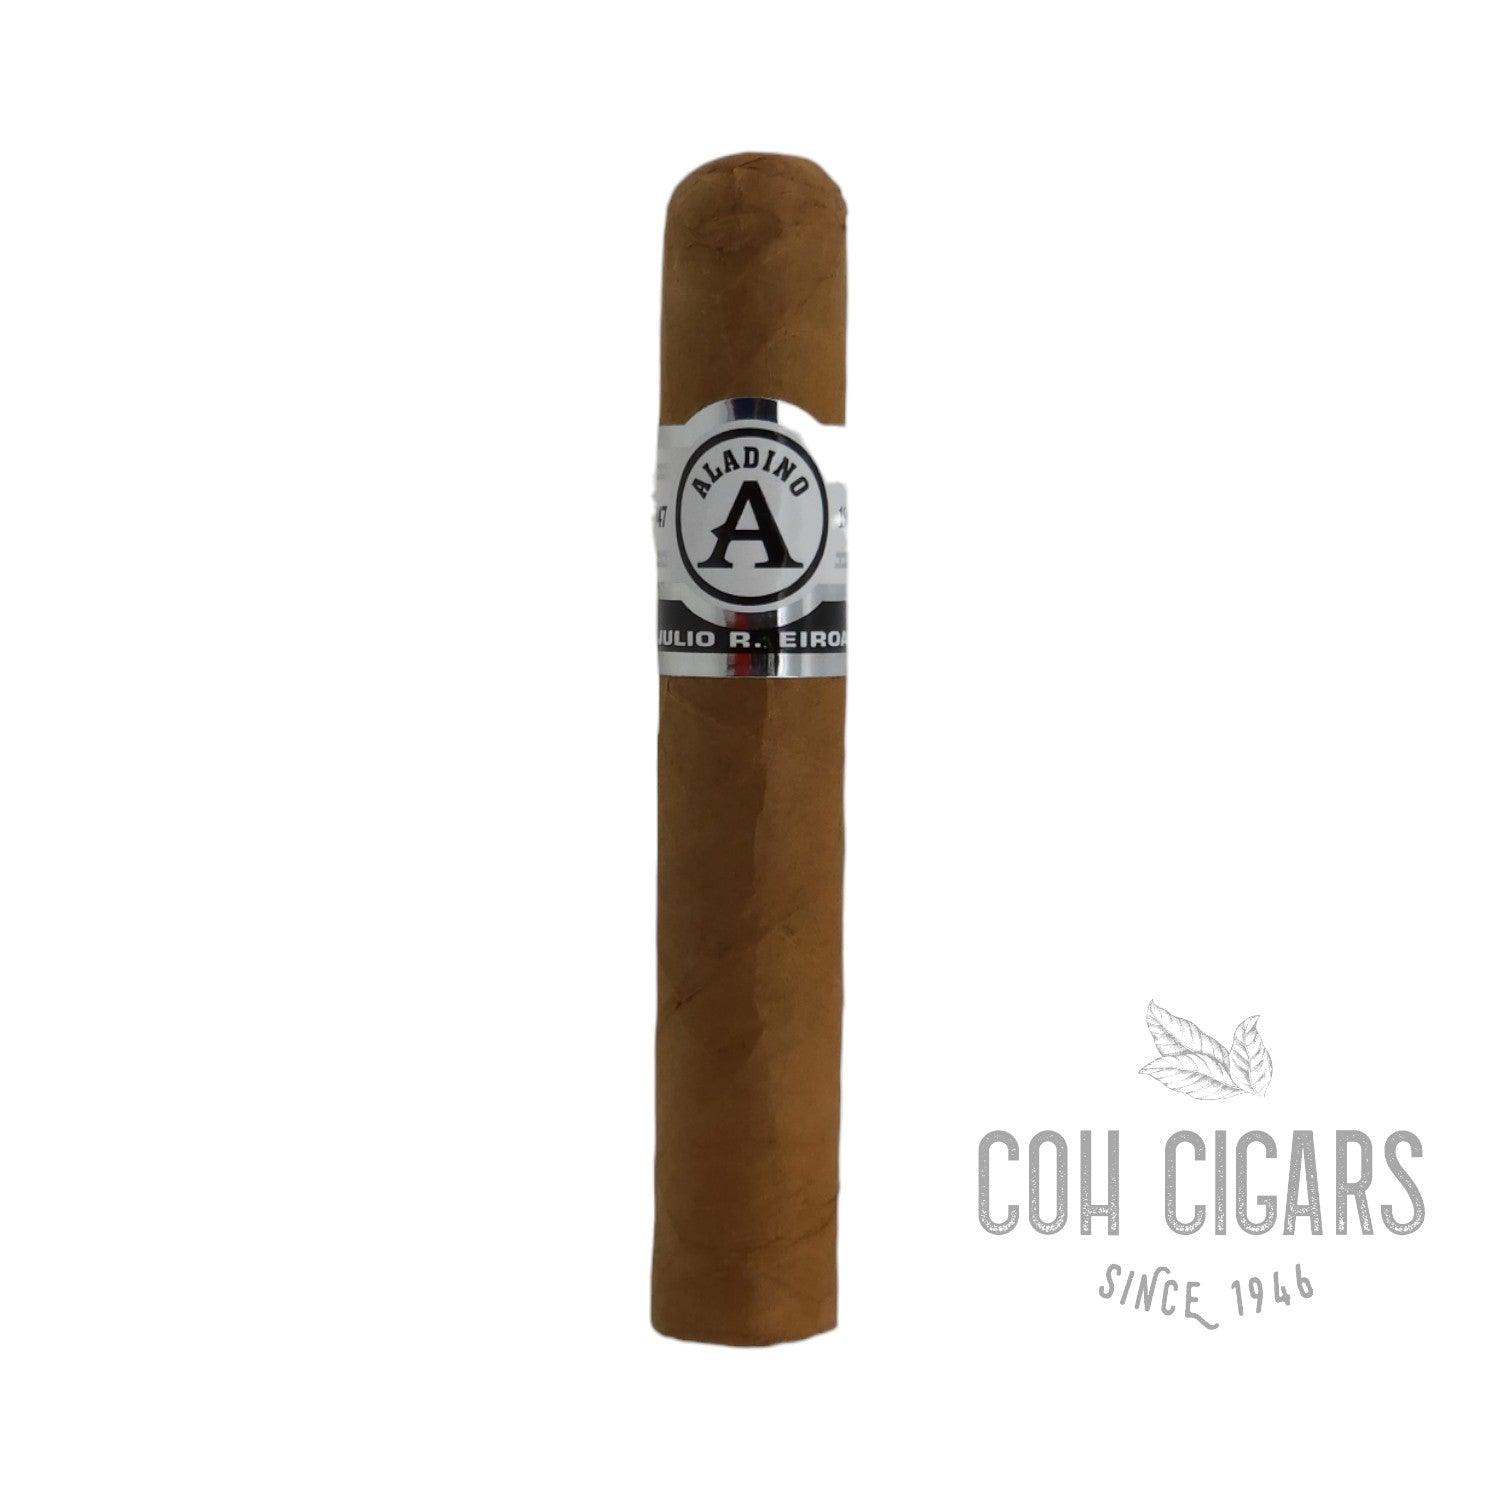 Aladino Cigar | JRE Tobacco Farm Robusto Connecticut | Box 20 - hk.cohcigars